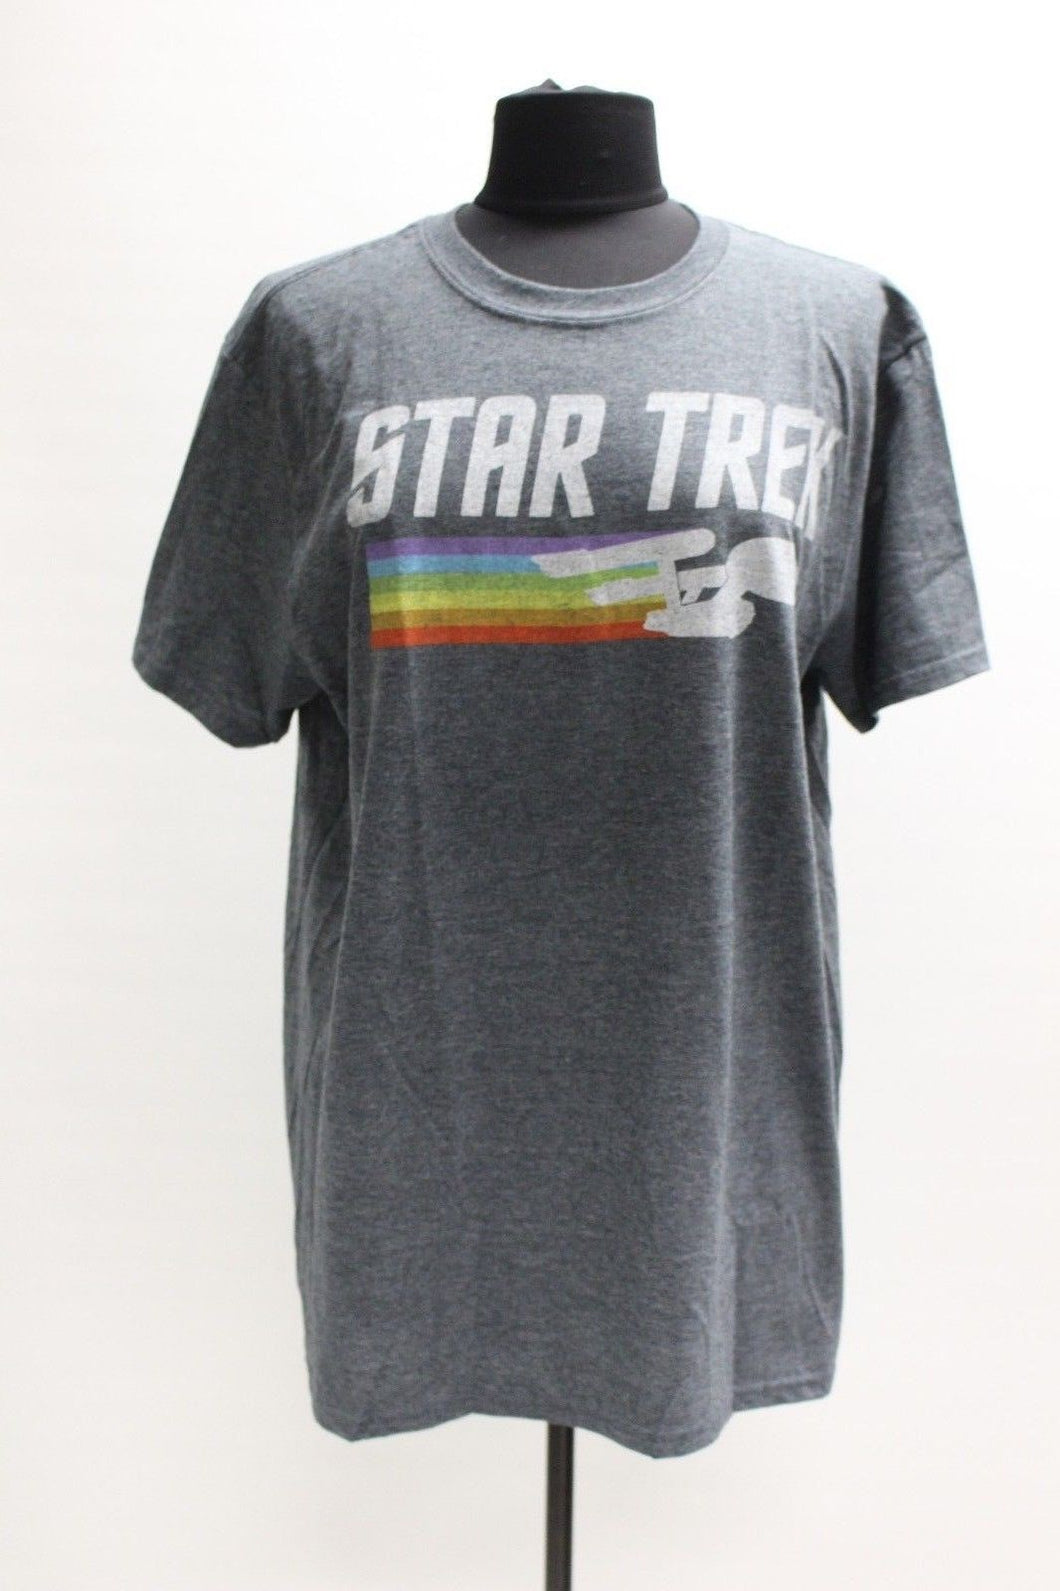 Star Trek T-Shirt, Size: Large, New! – Military Steals Surplus